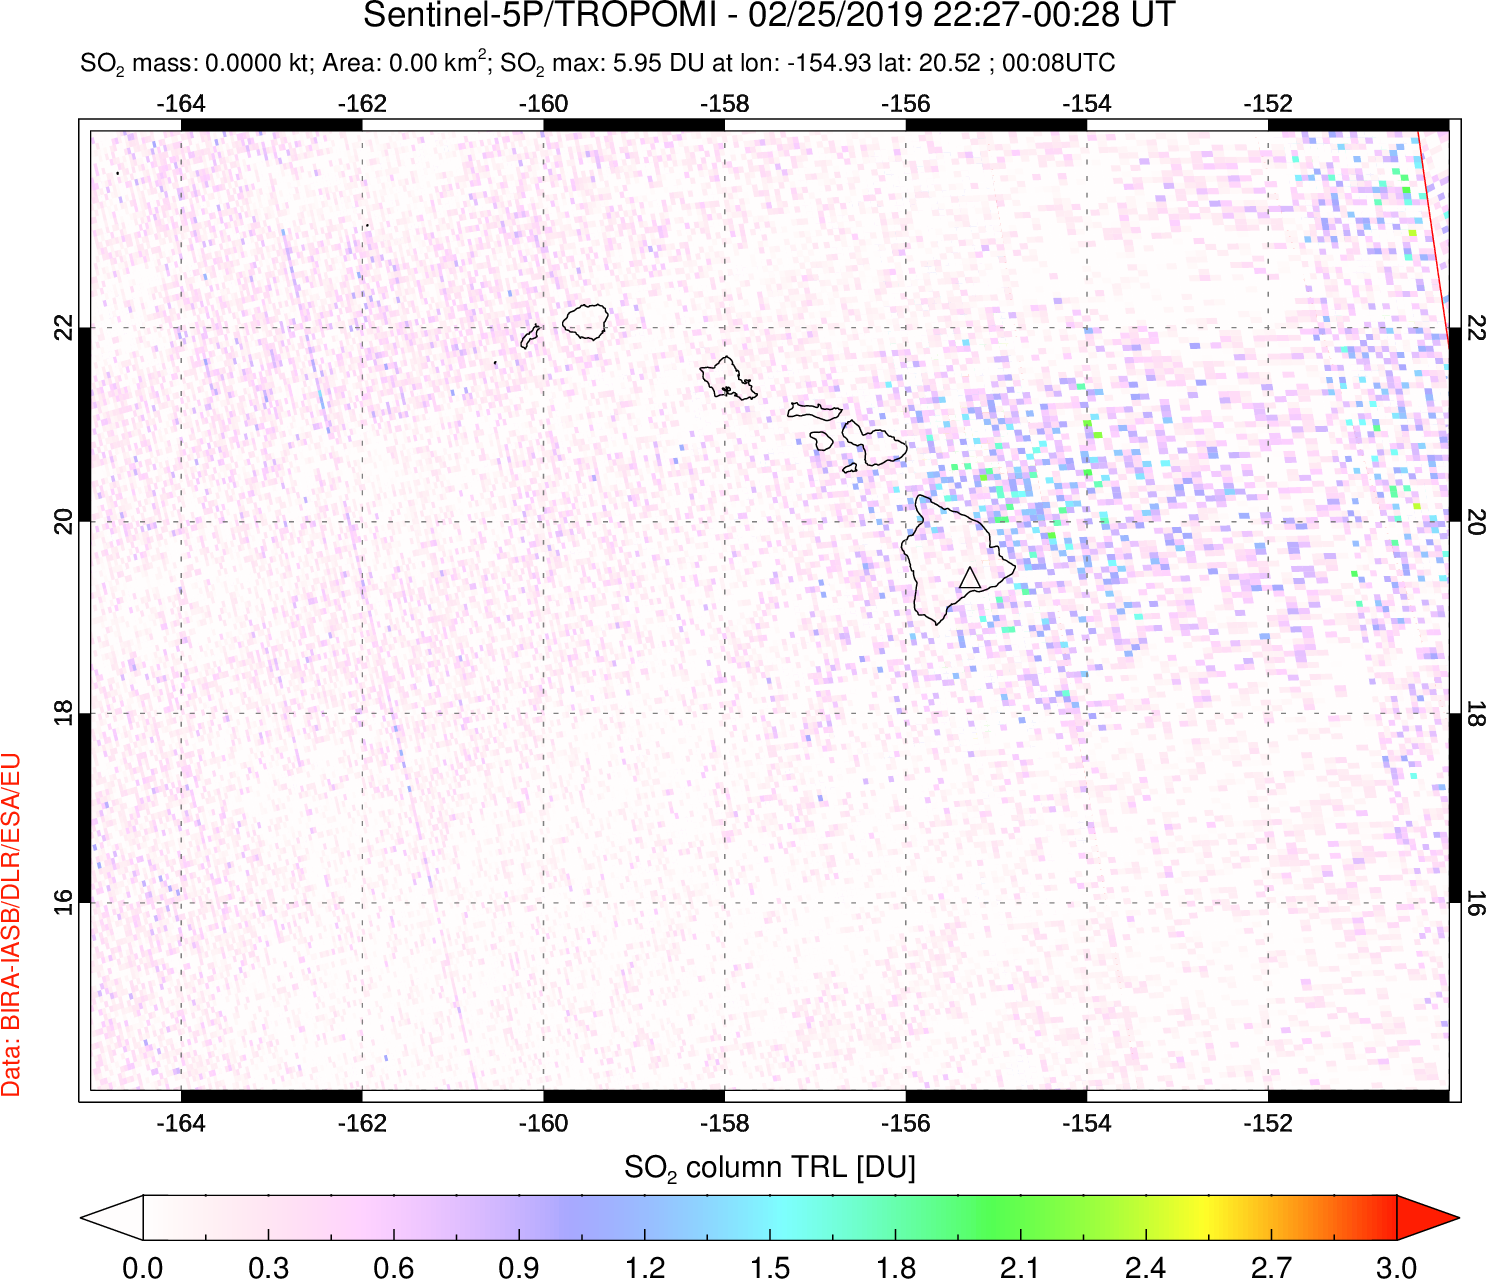 A sulfur dioxide image over Hawaii, USA on Feb 25, 2019.